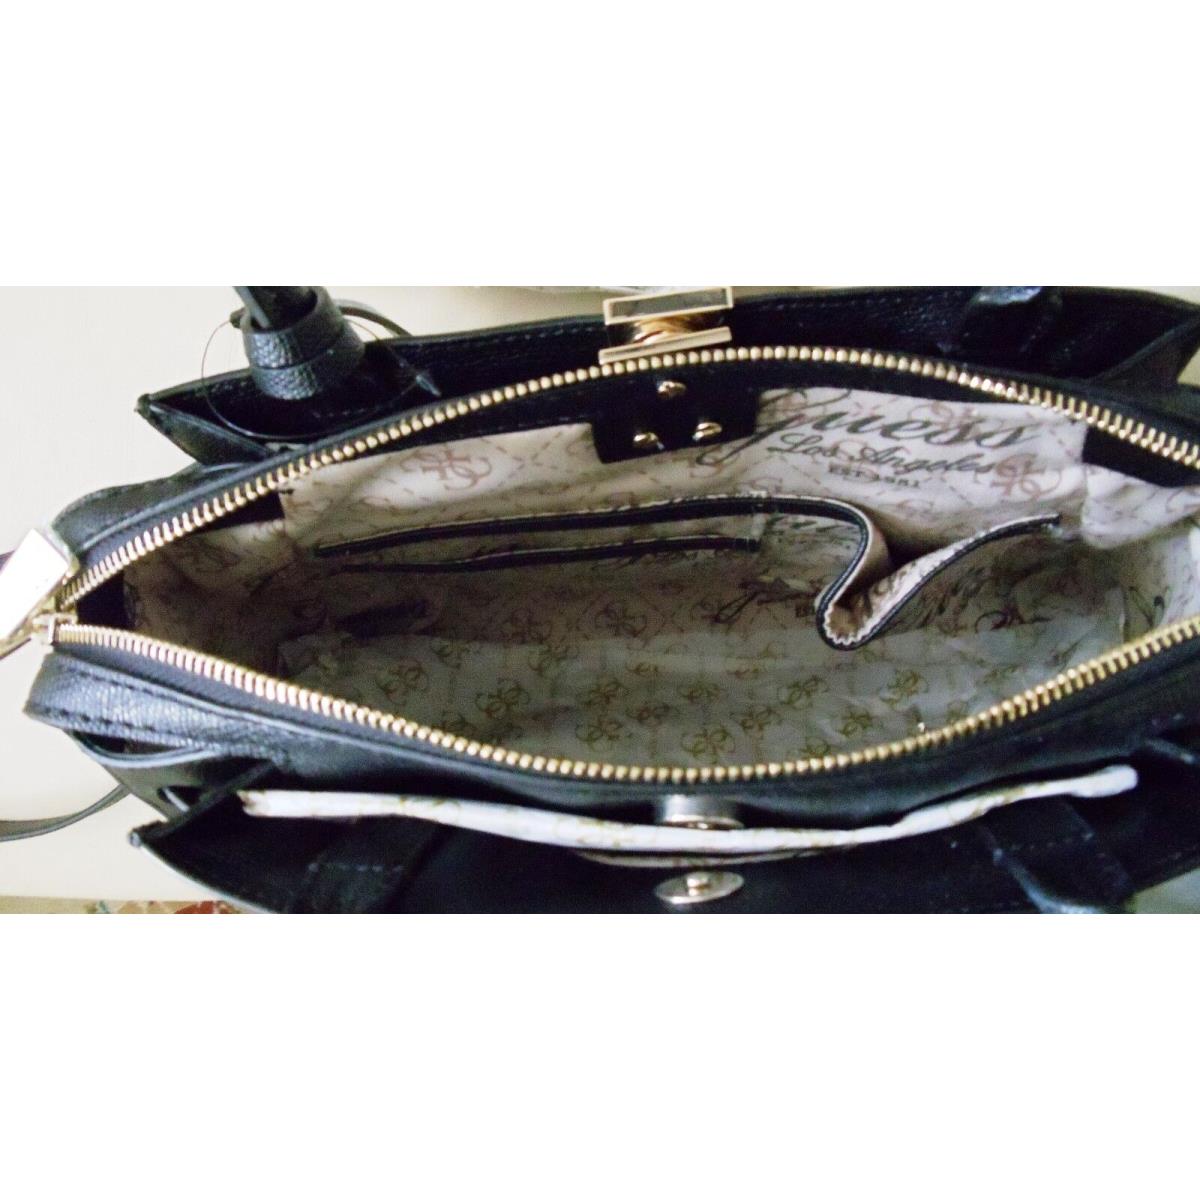 Guess  bag   - Coal Handle/Strap, Silver Hardware, Coal Exterior 6